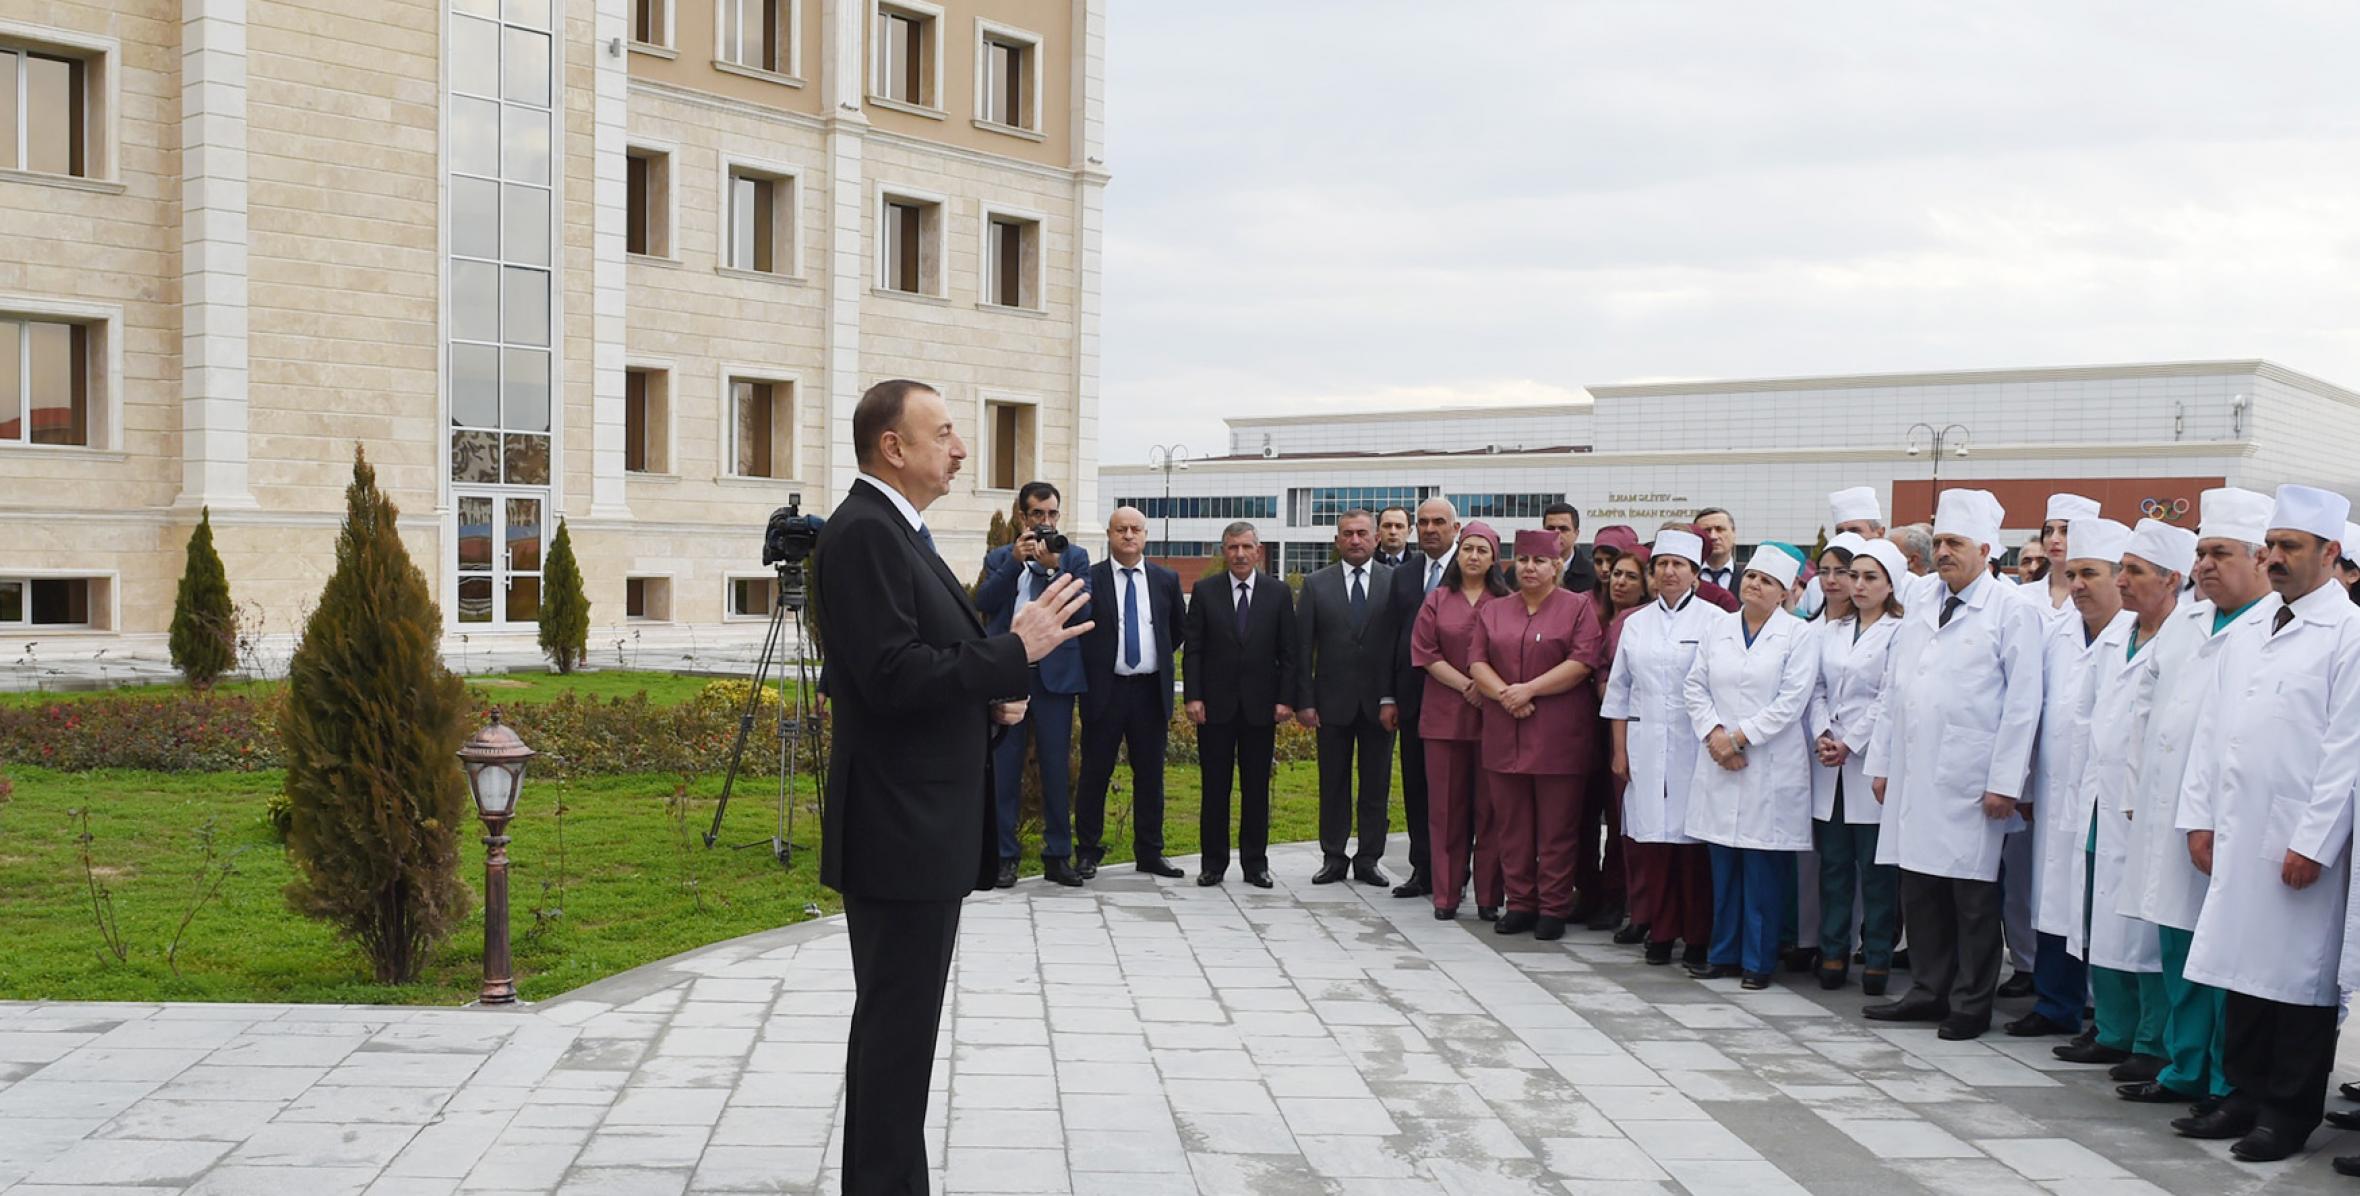 Speech by Ilham Aliyev at the opening of Nakhchivan Autonomous Republic Hospital